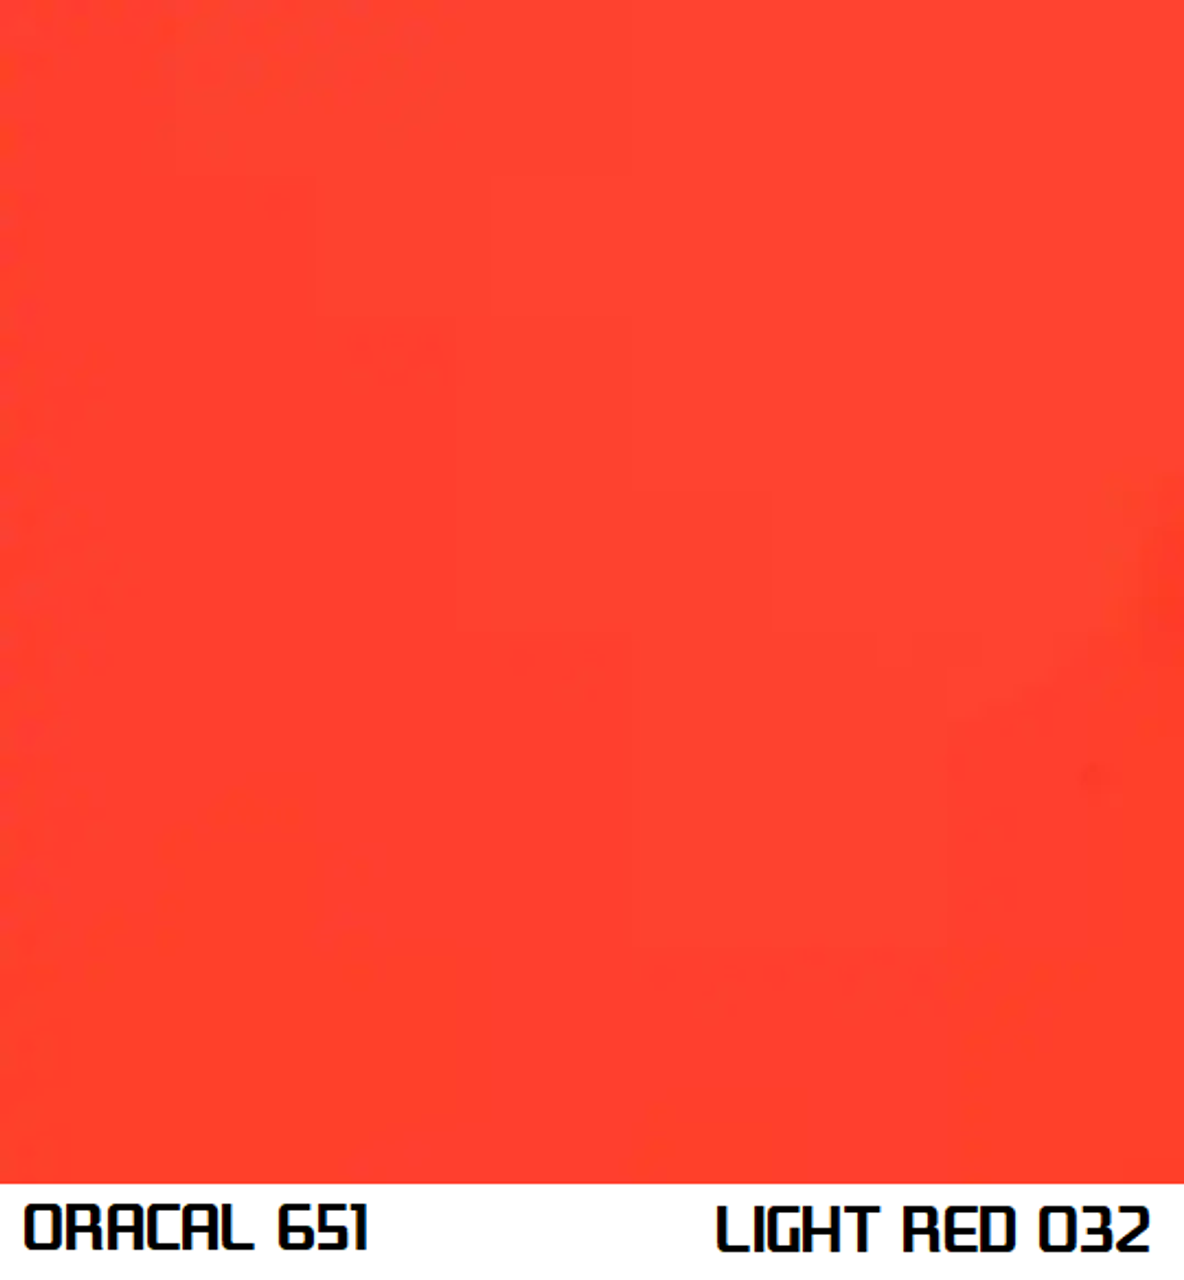 Oracal 651 Oracal 651 2.5 Mil Permanent Adhesive Vinyl